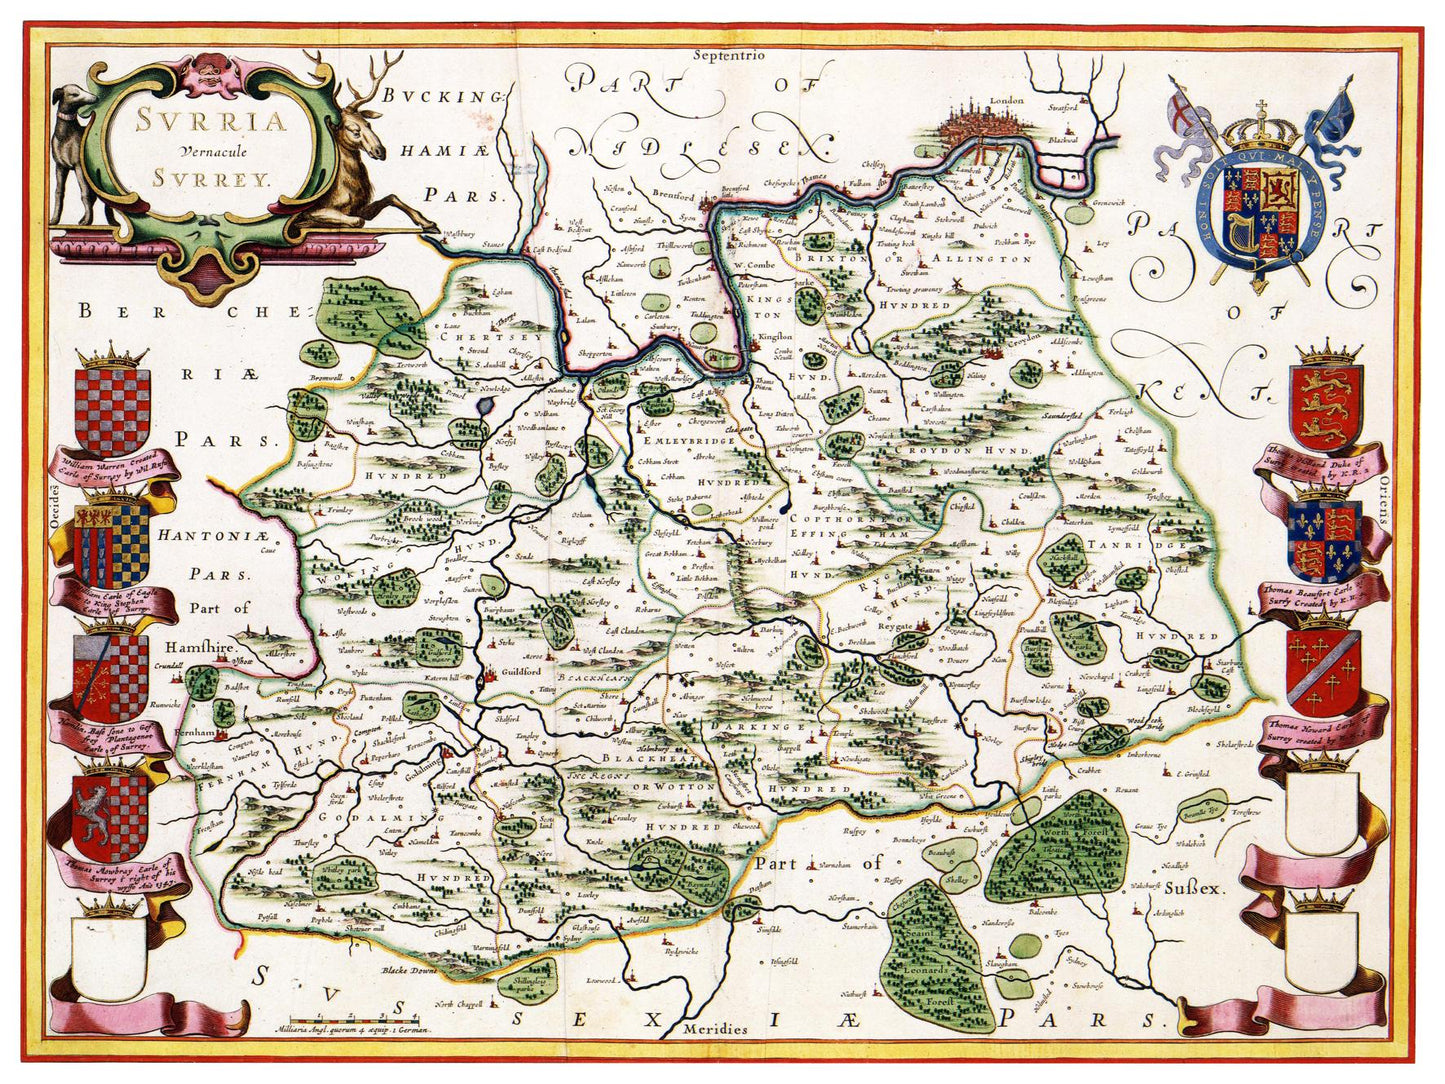 Historische Landkarte Surrey um 1646